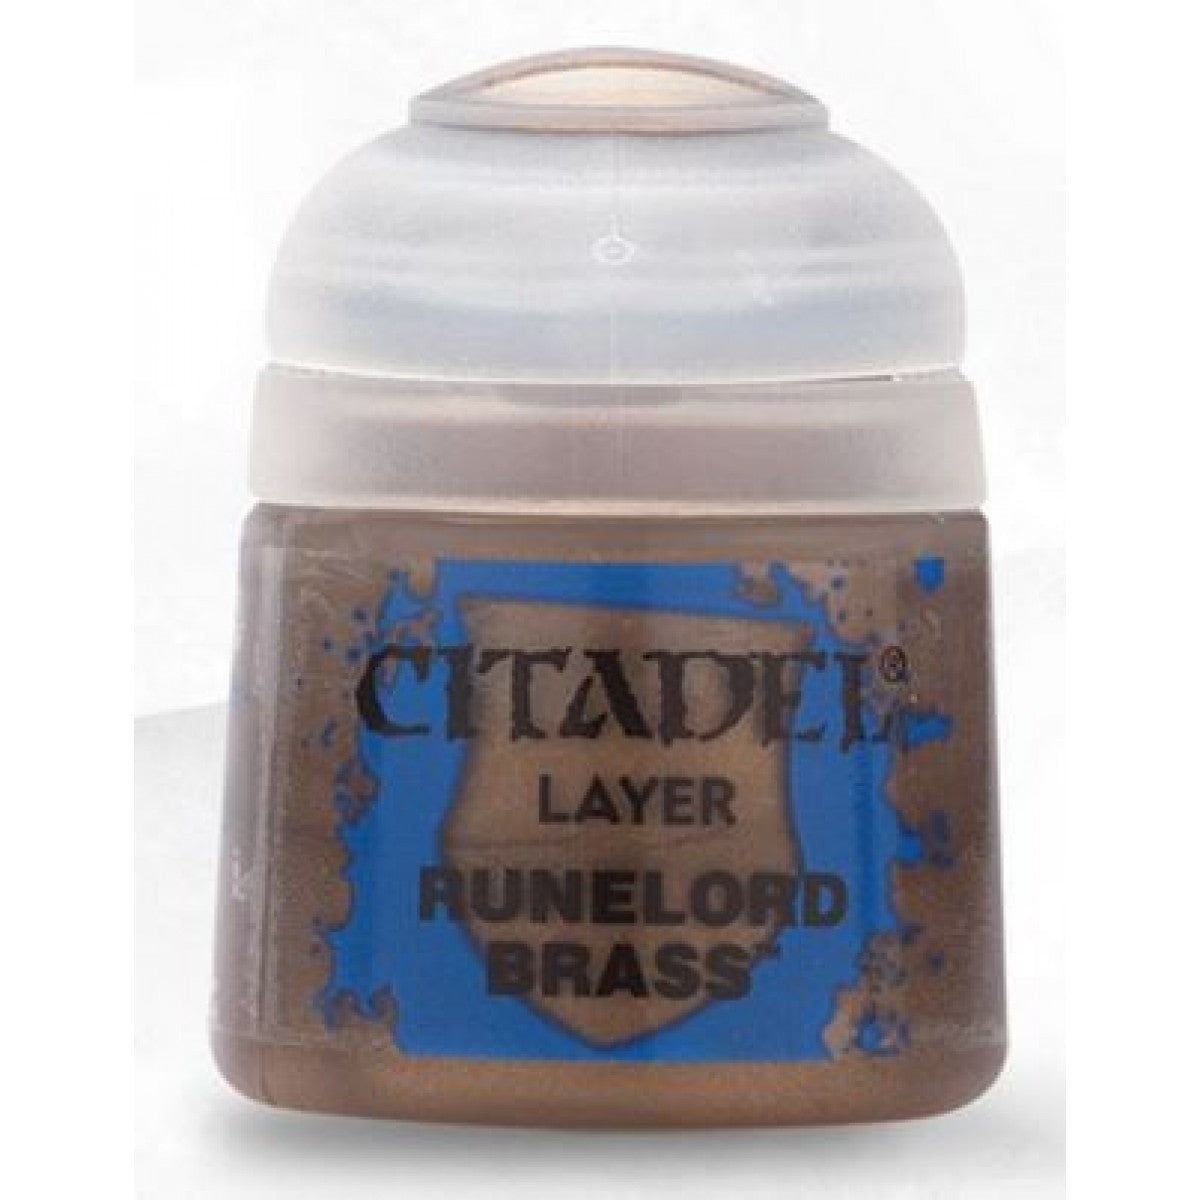 Citadel Layer Paint - Runelord Brass 12ml (22-66)